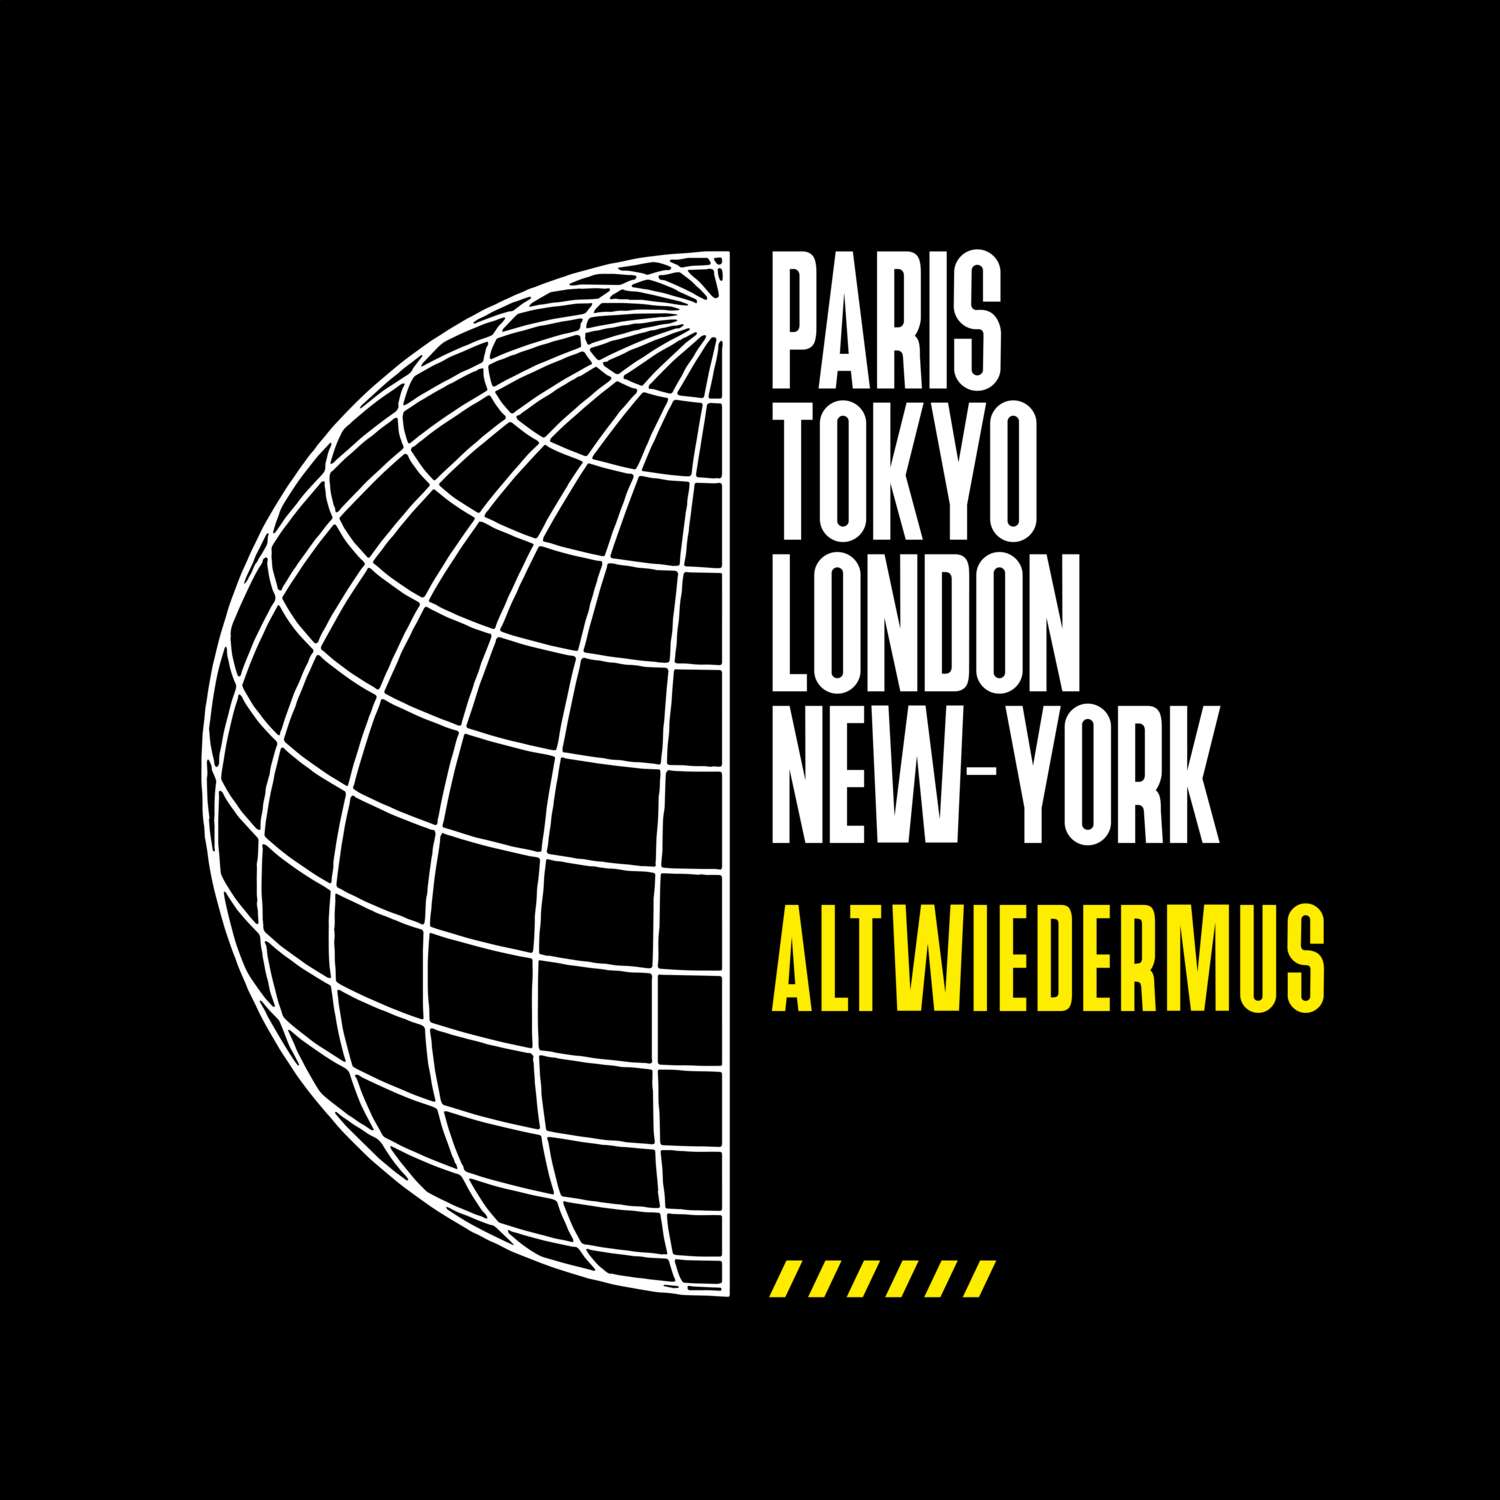 Altwiedermus T-Shirt »Paris Tokyo London«